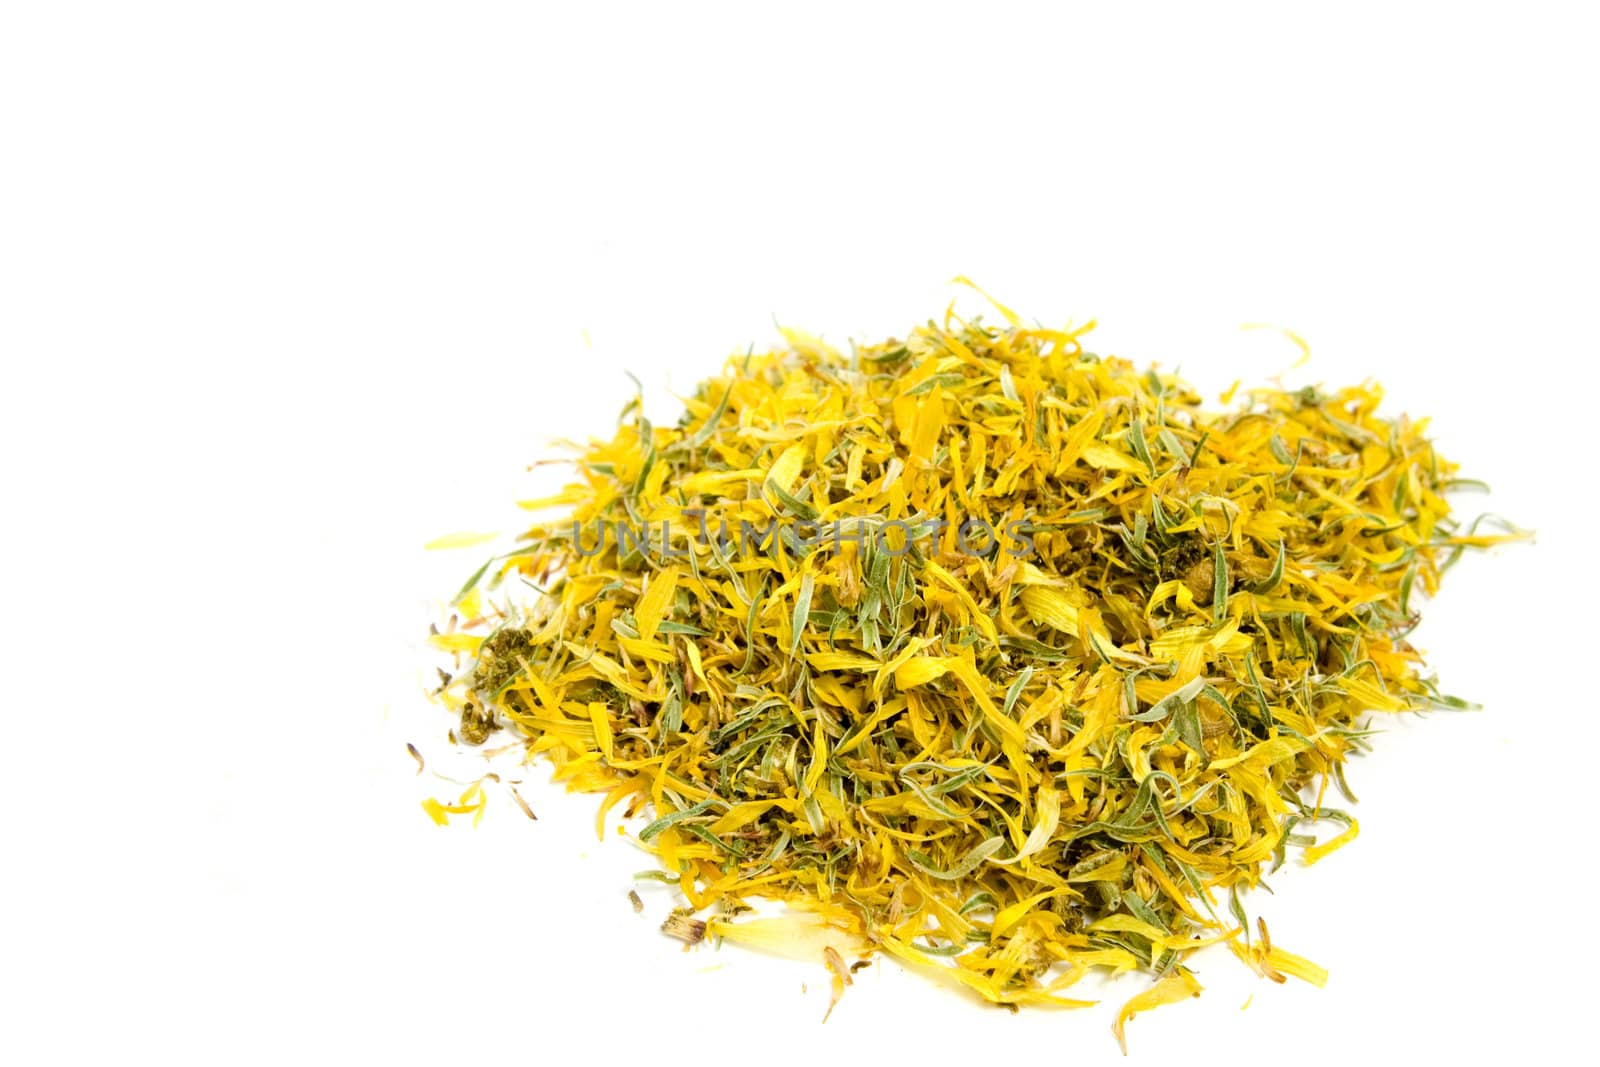 calendula (pot marigold) tea by nubephoto